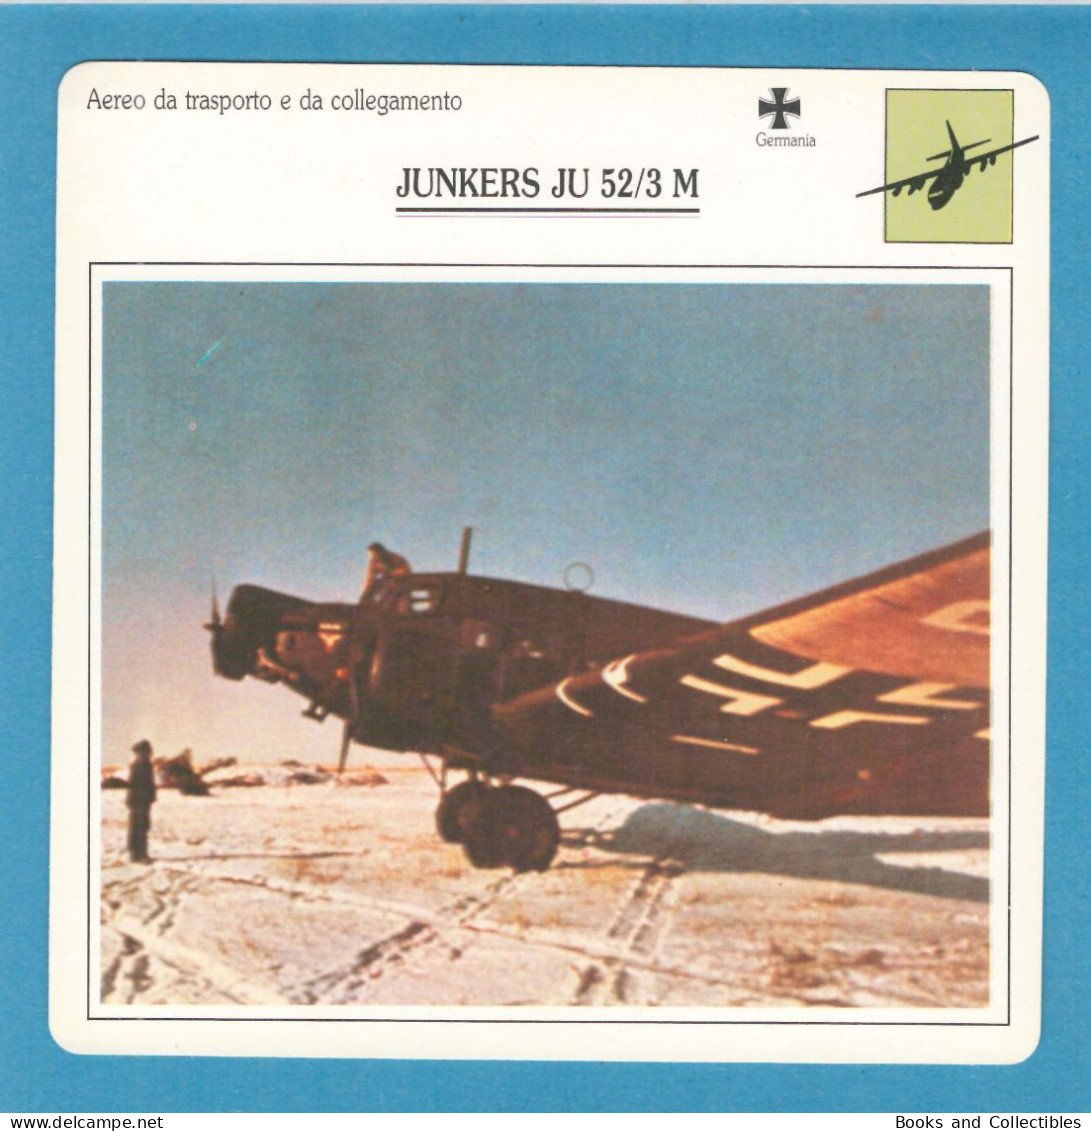 DeAgostini Educational Sheet "Warplanes" / JUNKERS JU 52/3 M (Germany) - Aviation